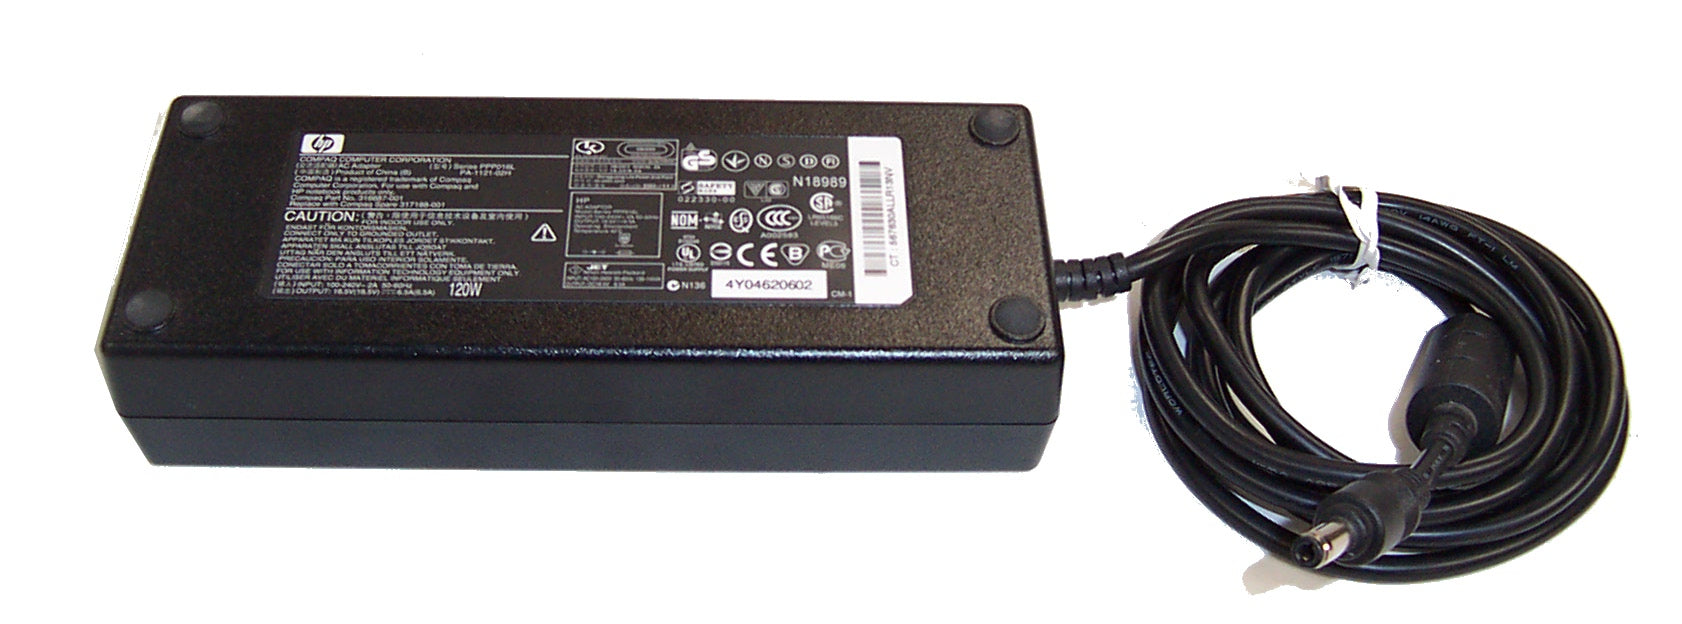 19V 7.1A 135W HSTNN-SA01 original laptop charger for HP Pavilion ZD7250EA-PH977EA